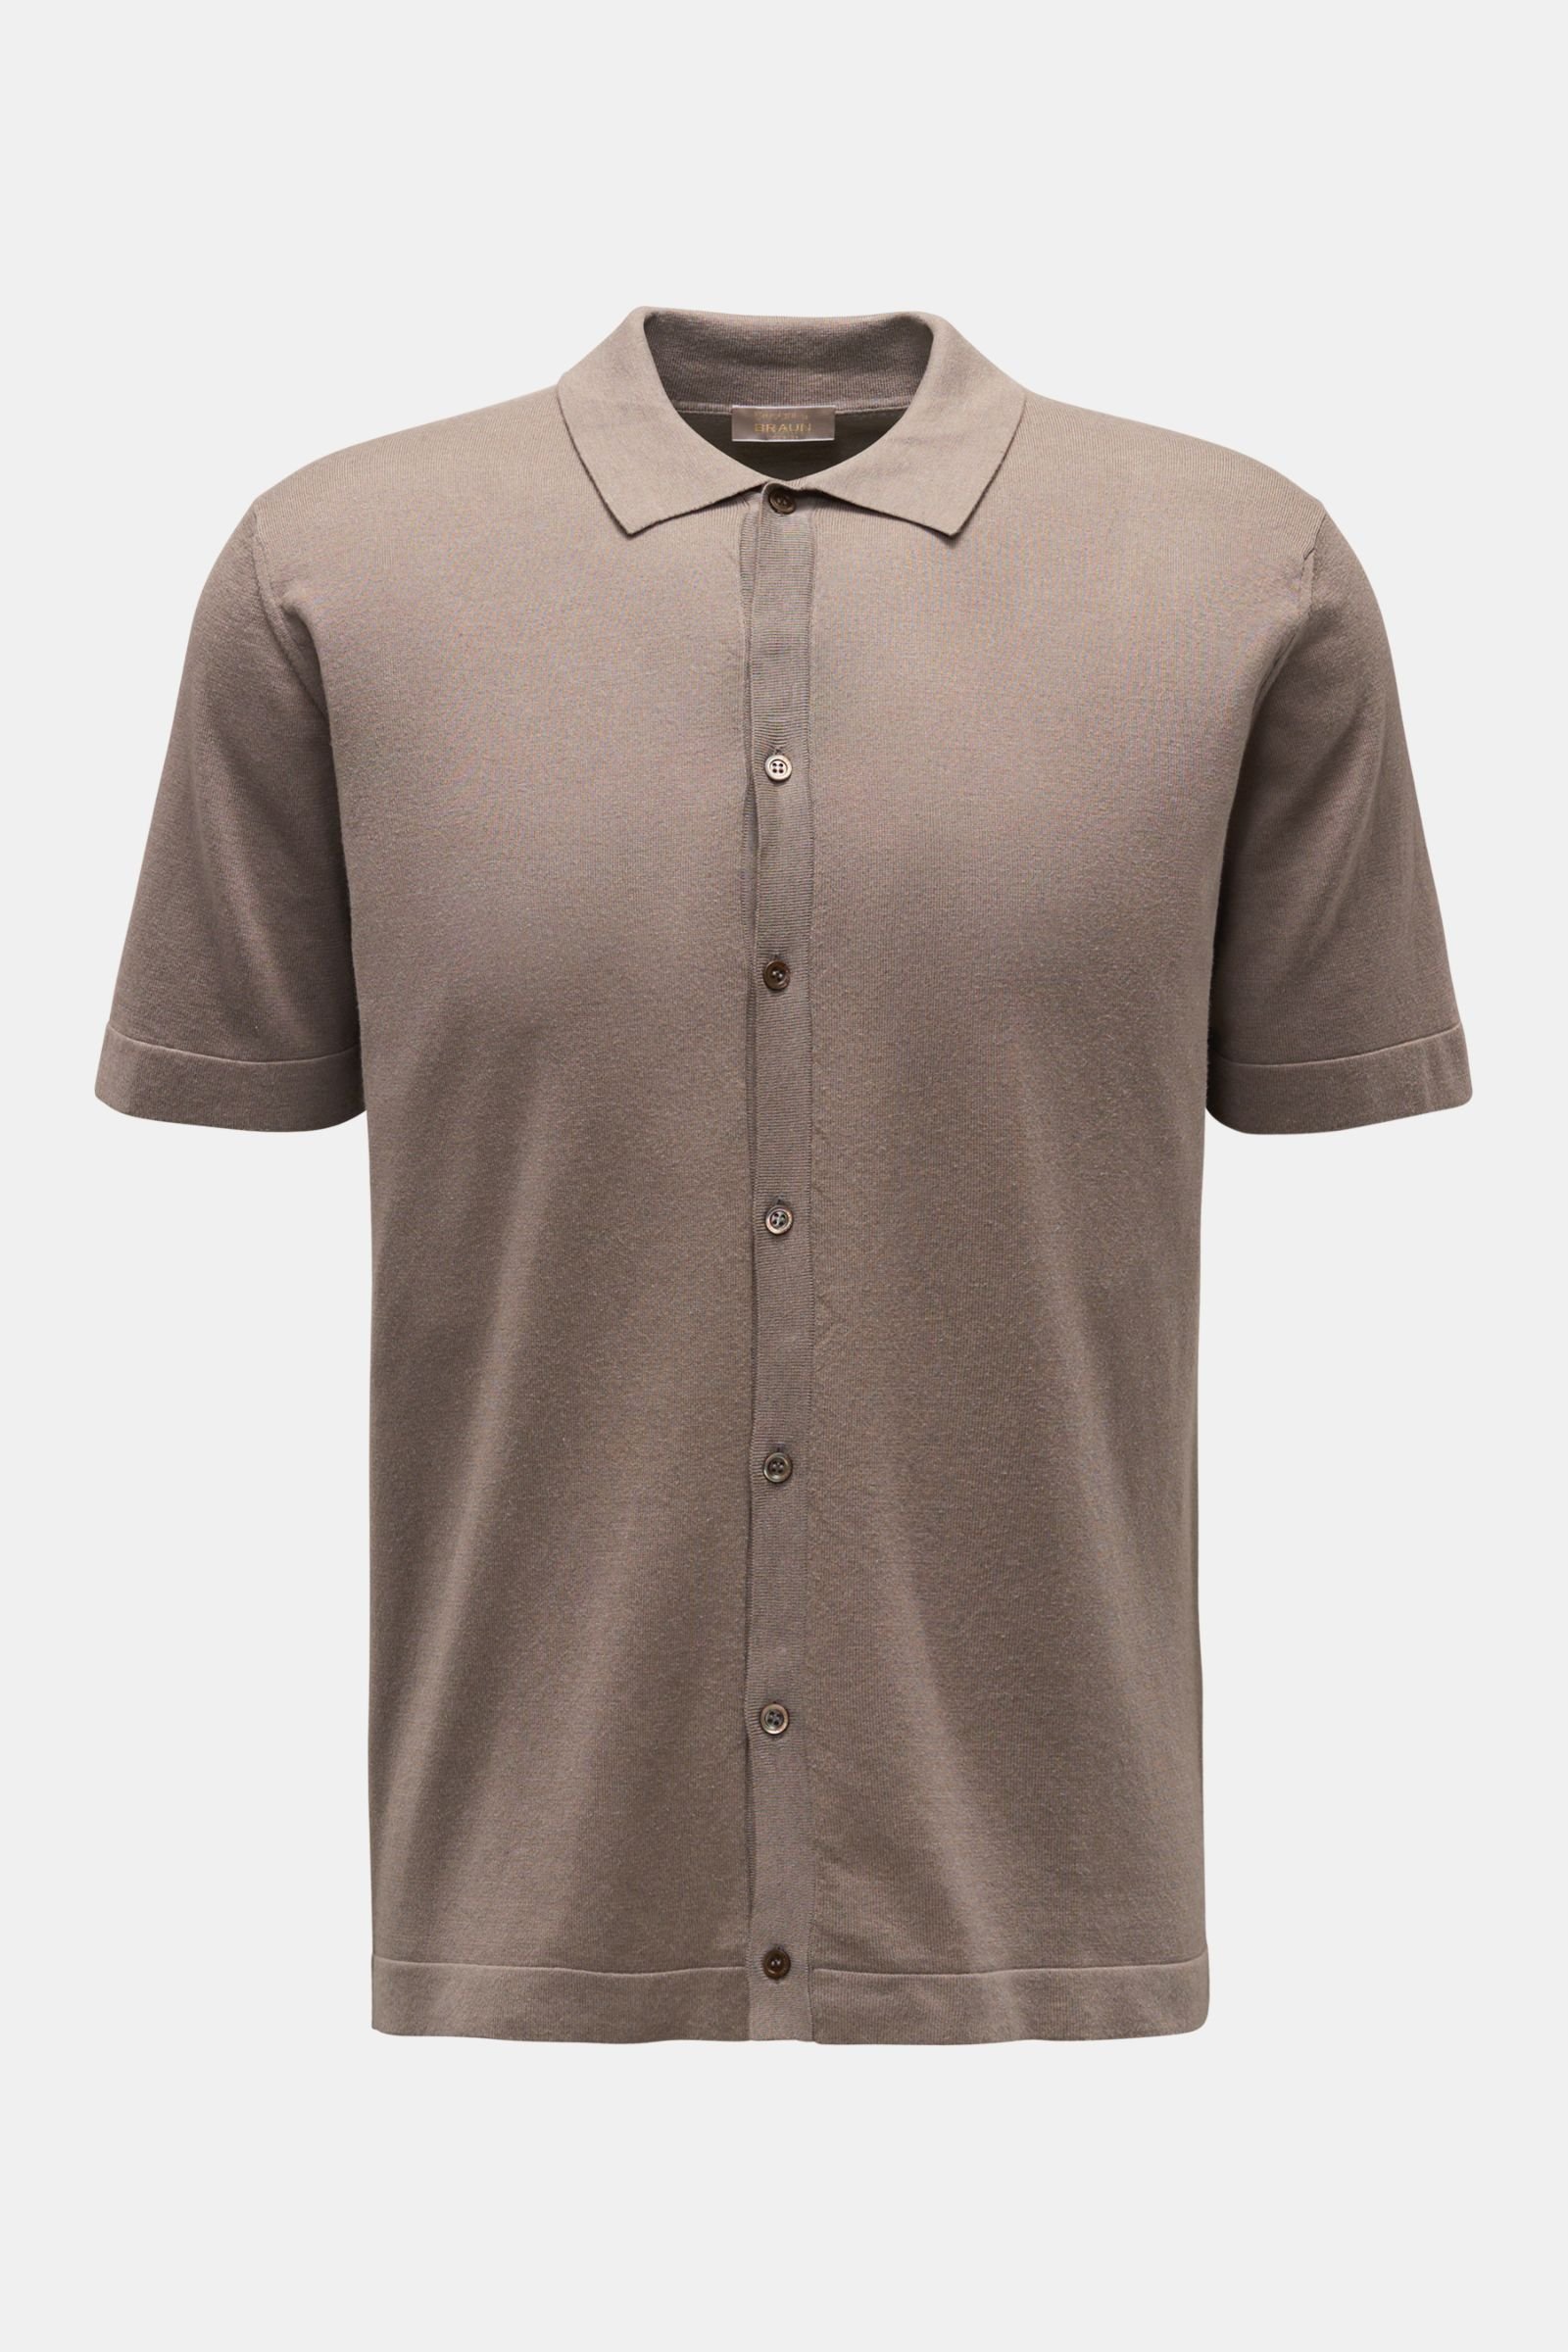 Short sleeve knit shirt narrow collar grey-brown